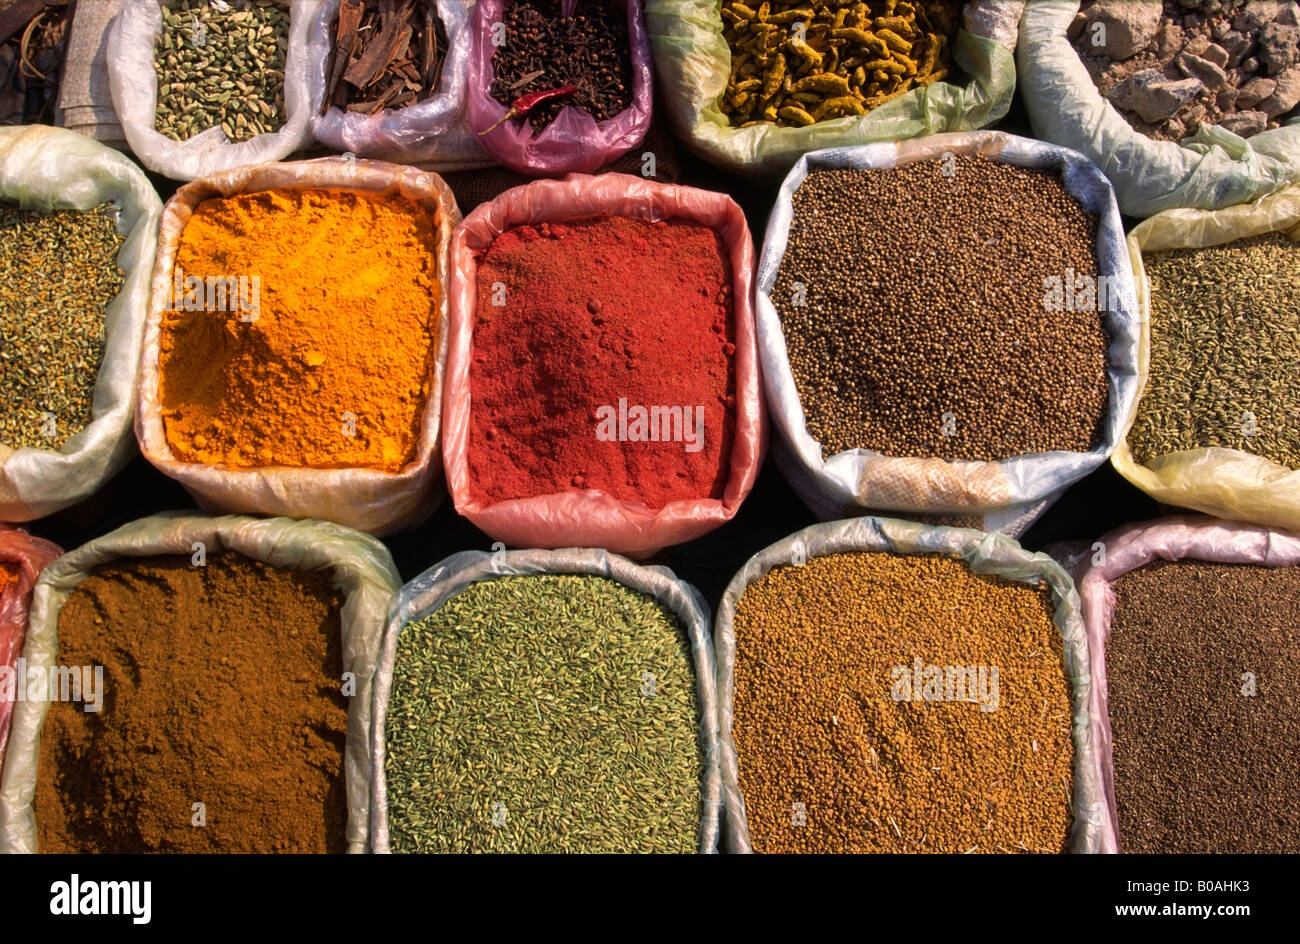 India West Bengal Madarihat weekend market sacks of spices Stock Photo